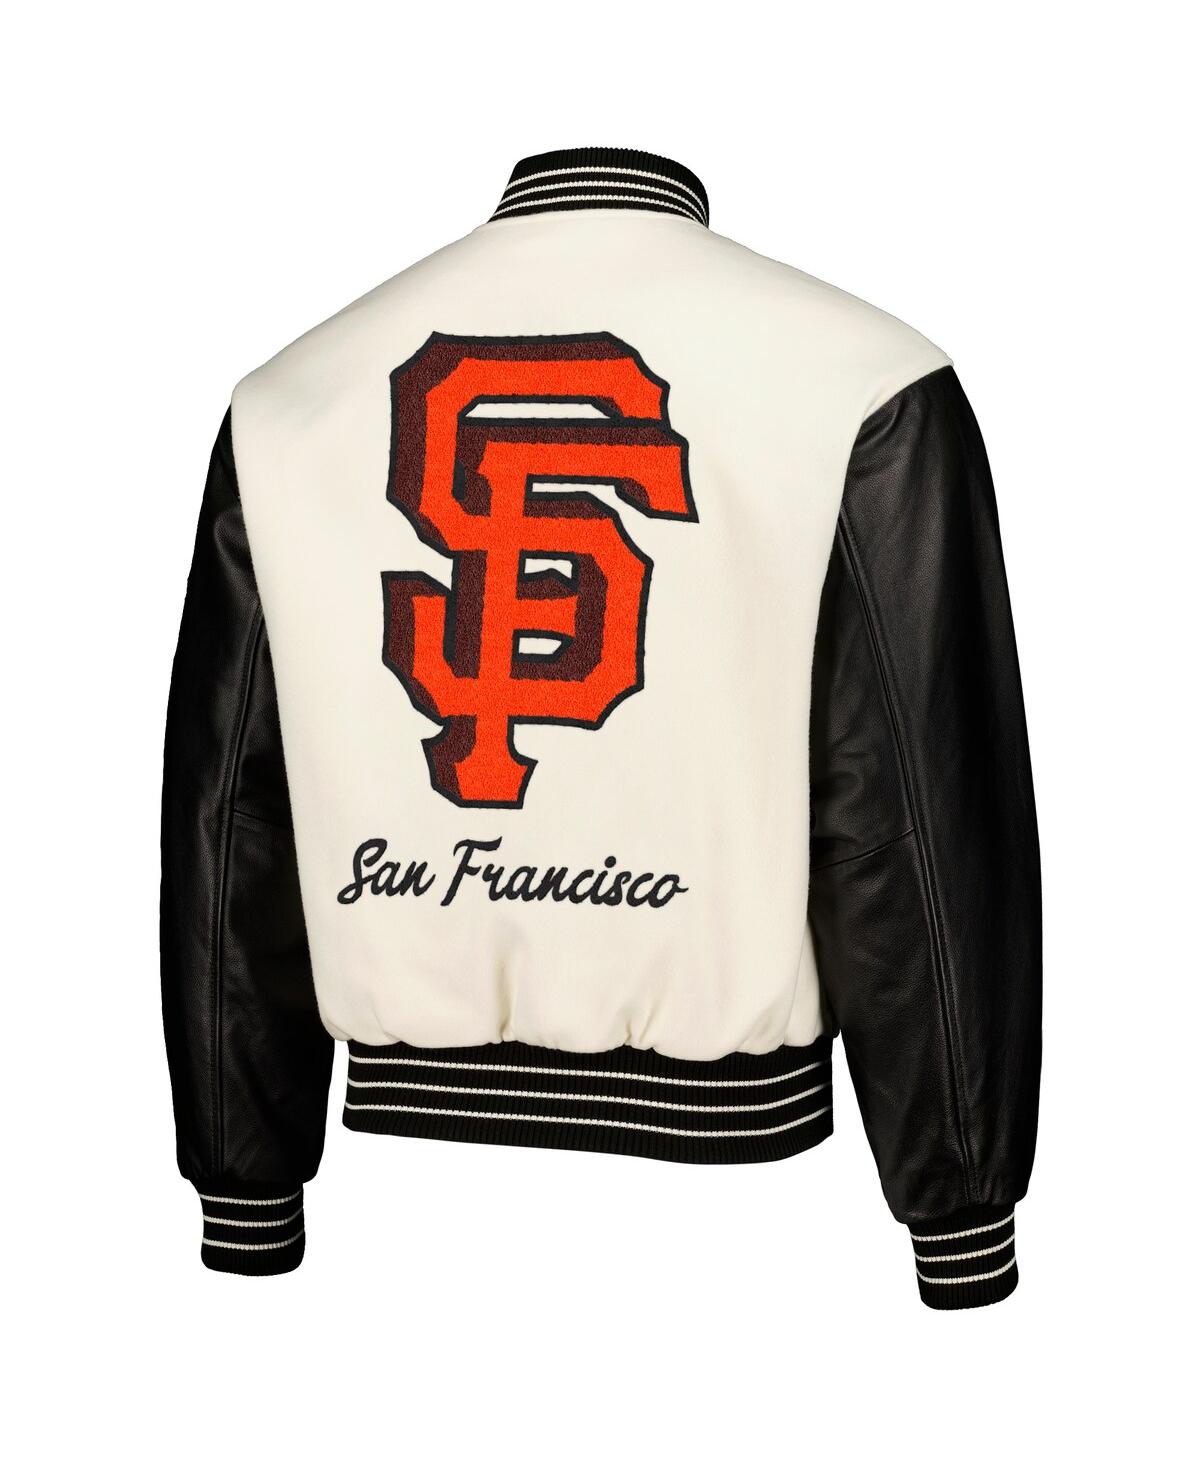 Shop Pleasures Men's  White San Francisco Giants Full-snap Varsity Jacket